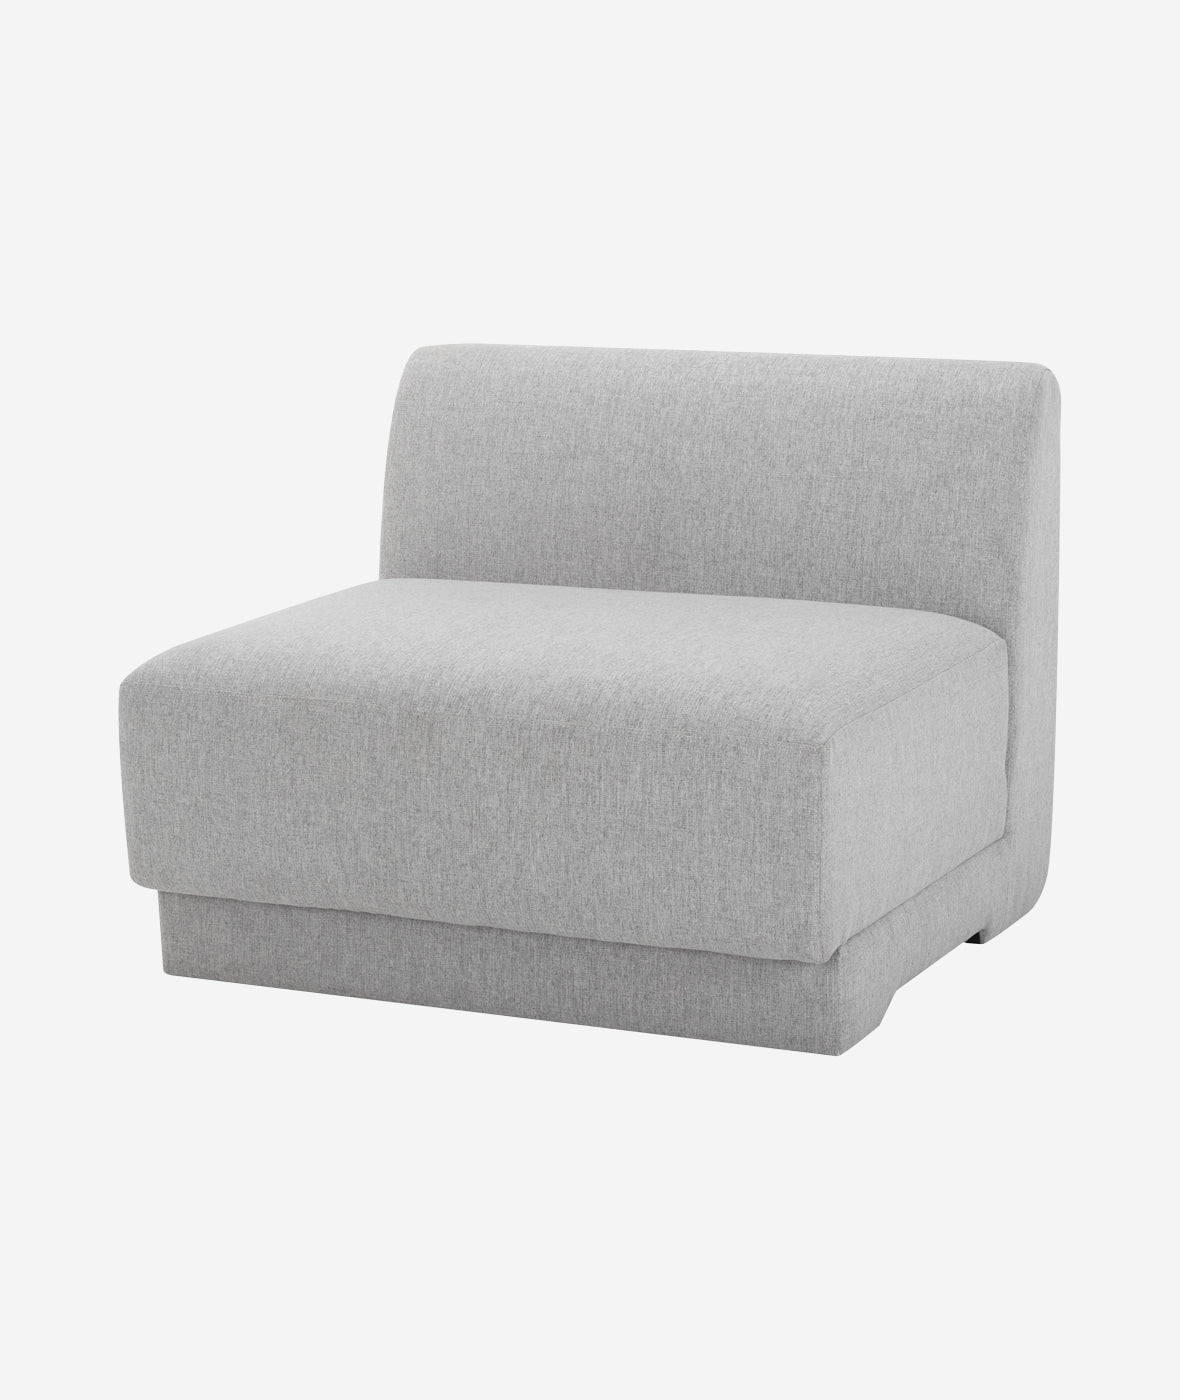 Seraphina Modular Armless Chair - More Options